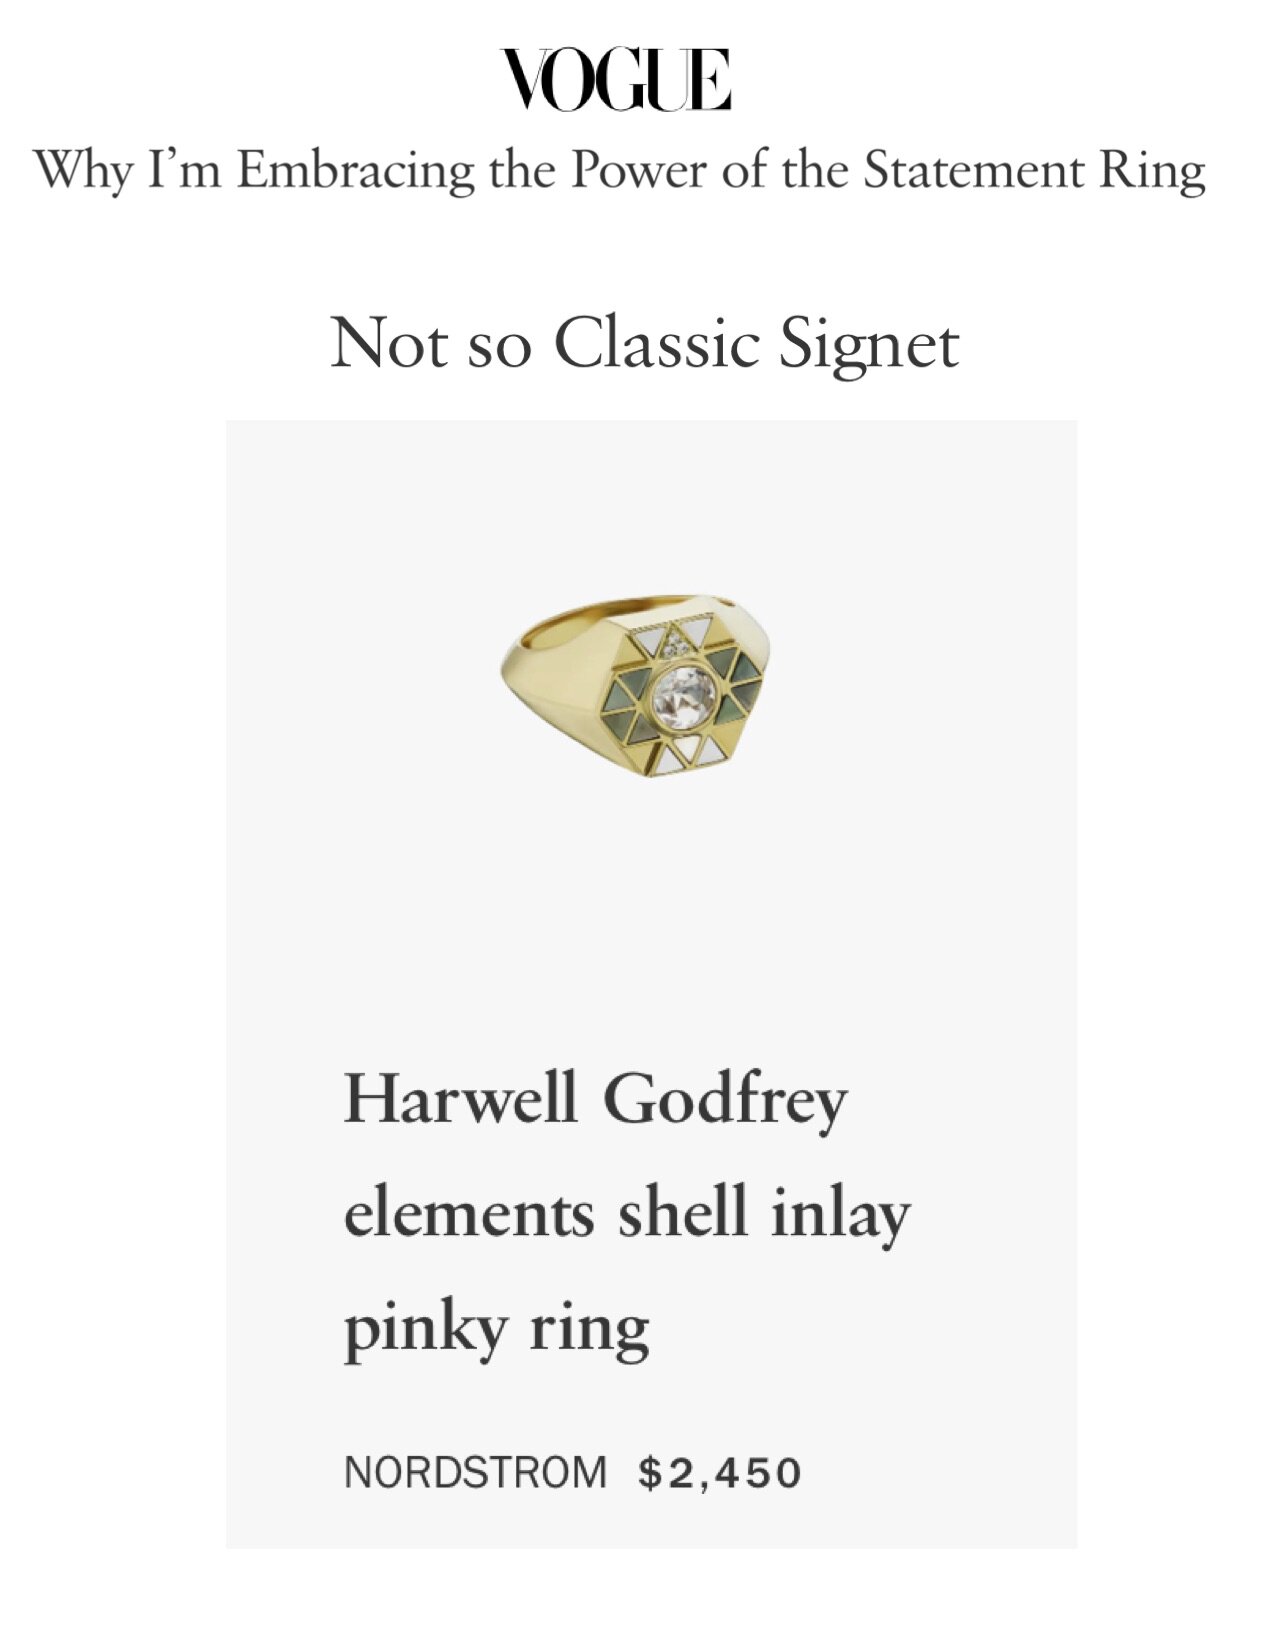 Harwell Godfrey on on Vogue.com, February 2021